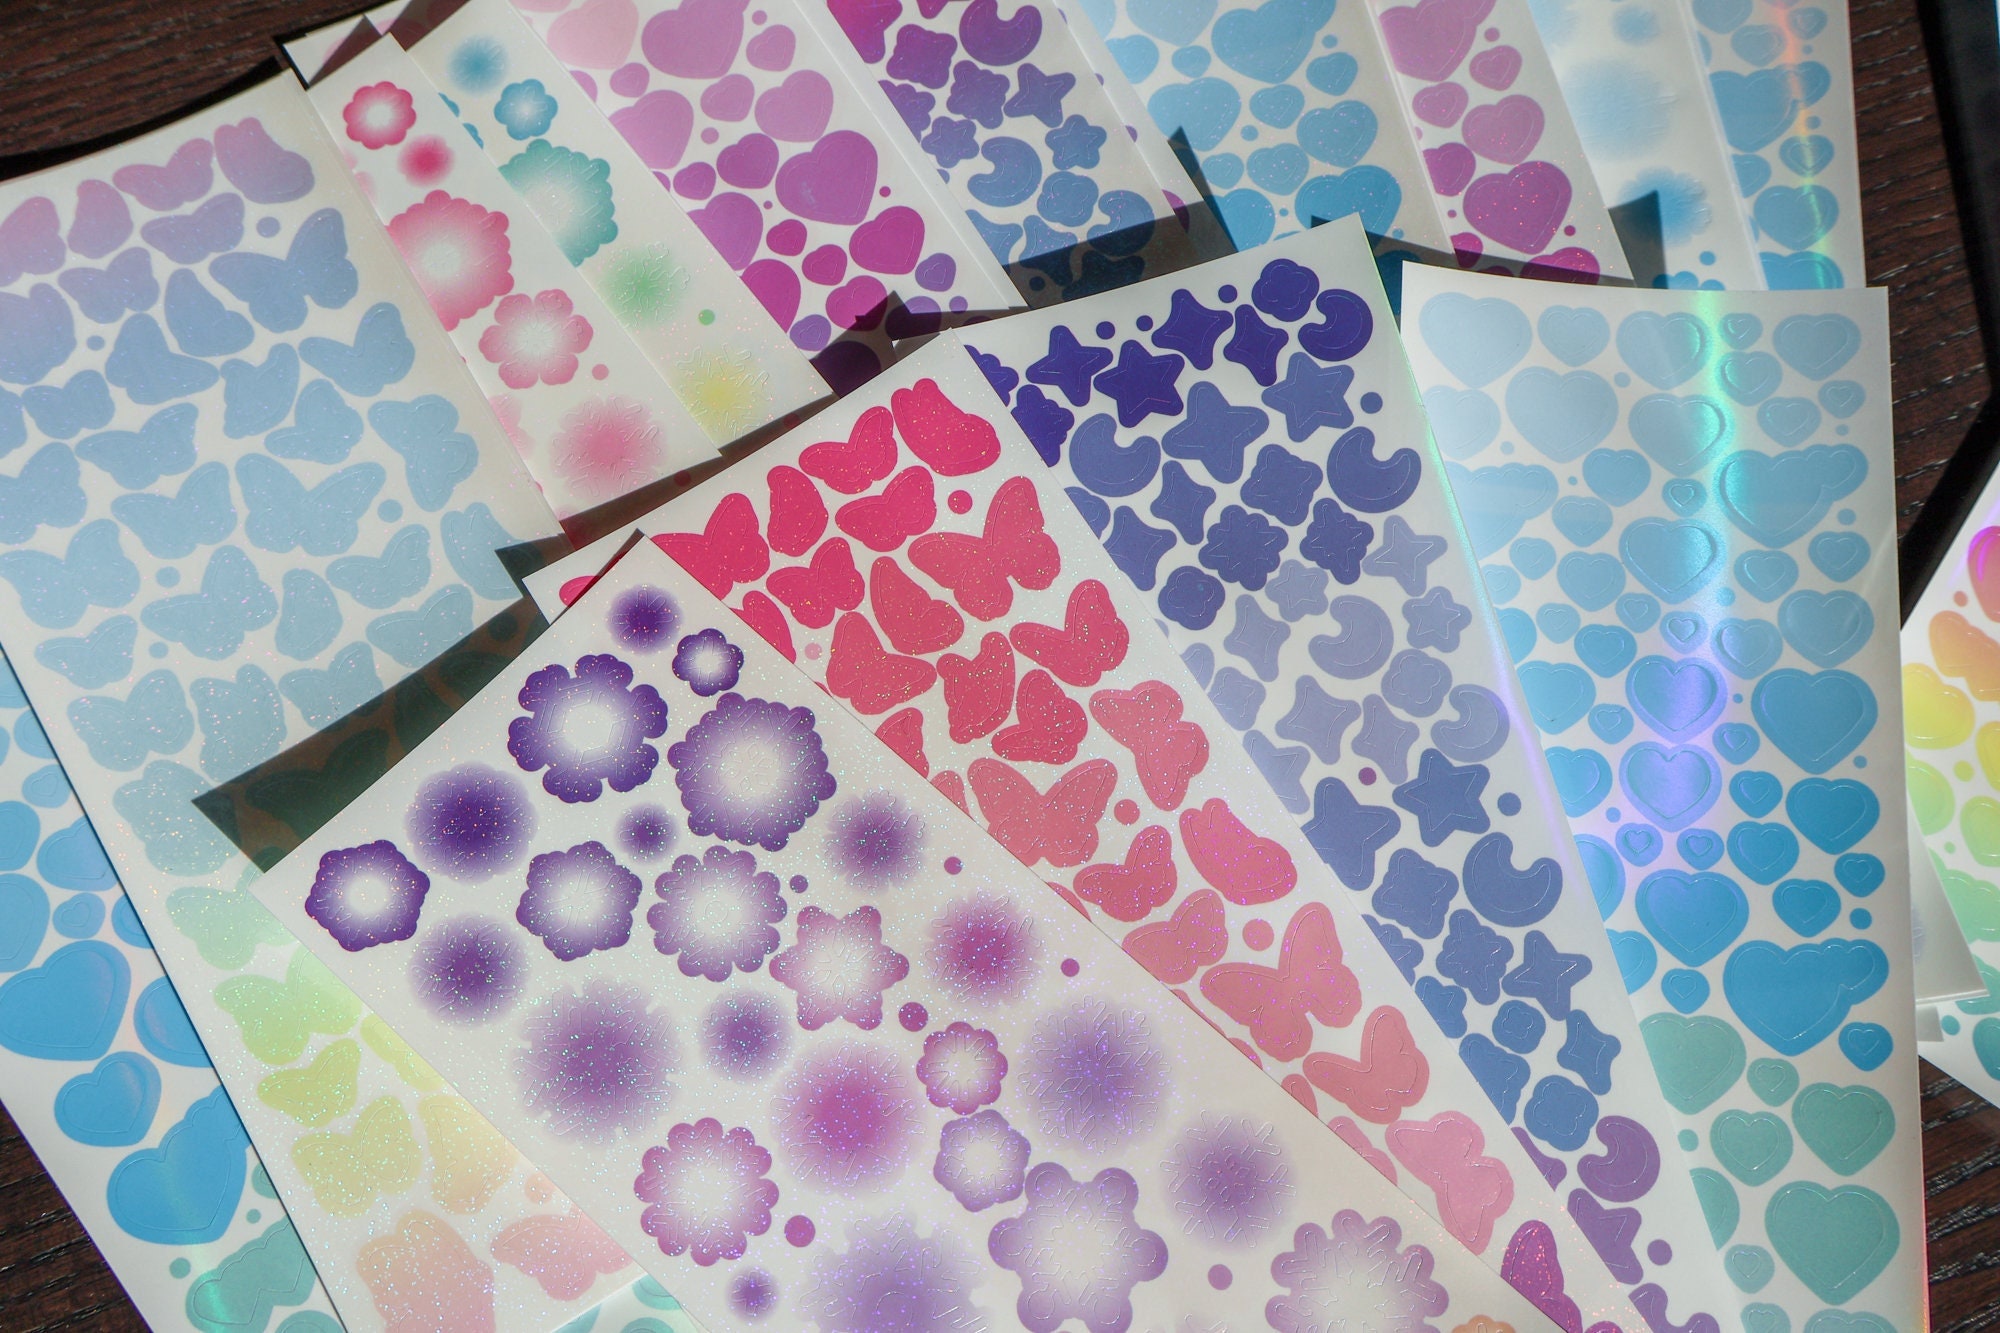 Glitter Stickers Sheet,100pcs/box Cartoon Animal Stickers,kawaii  Stickers,cute Stationery 